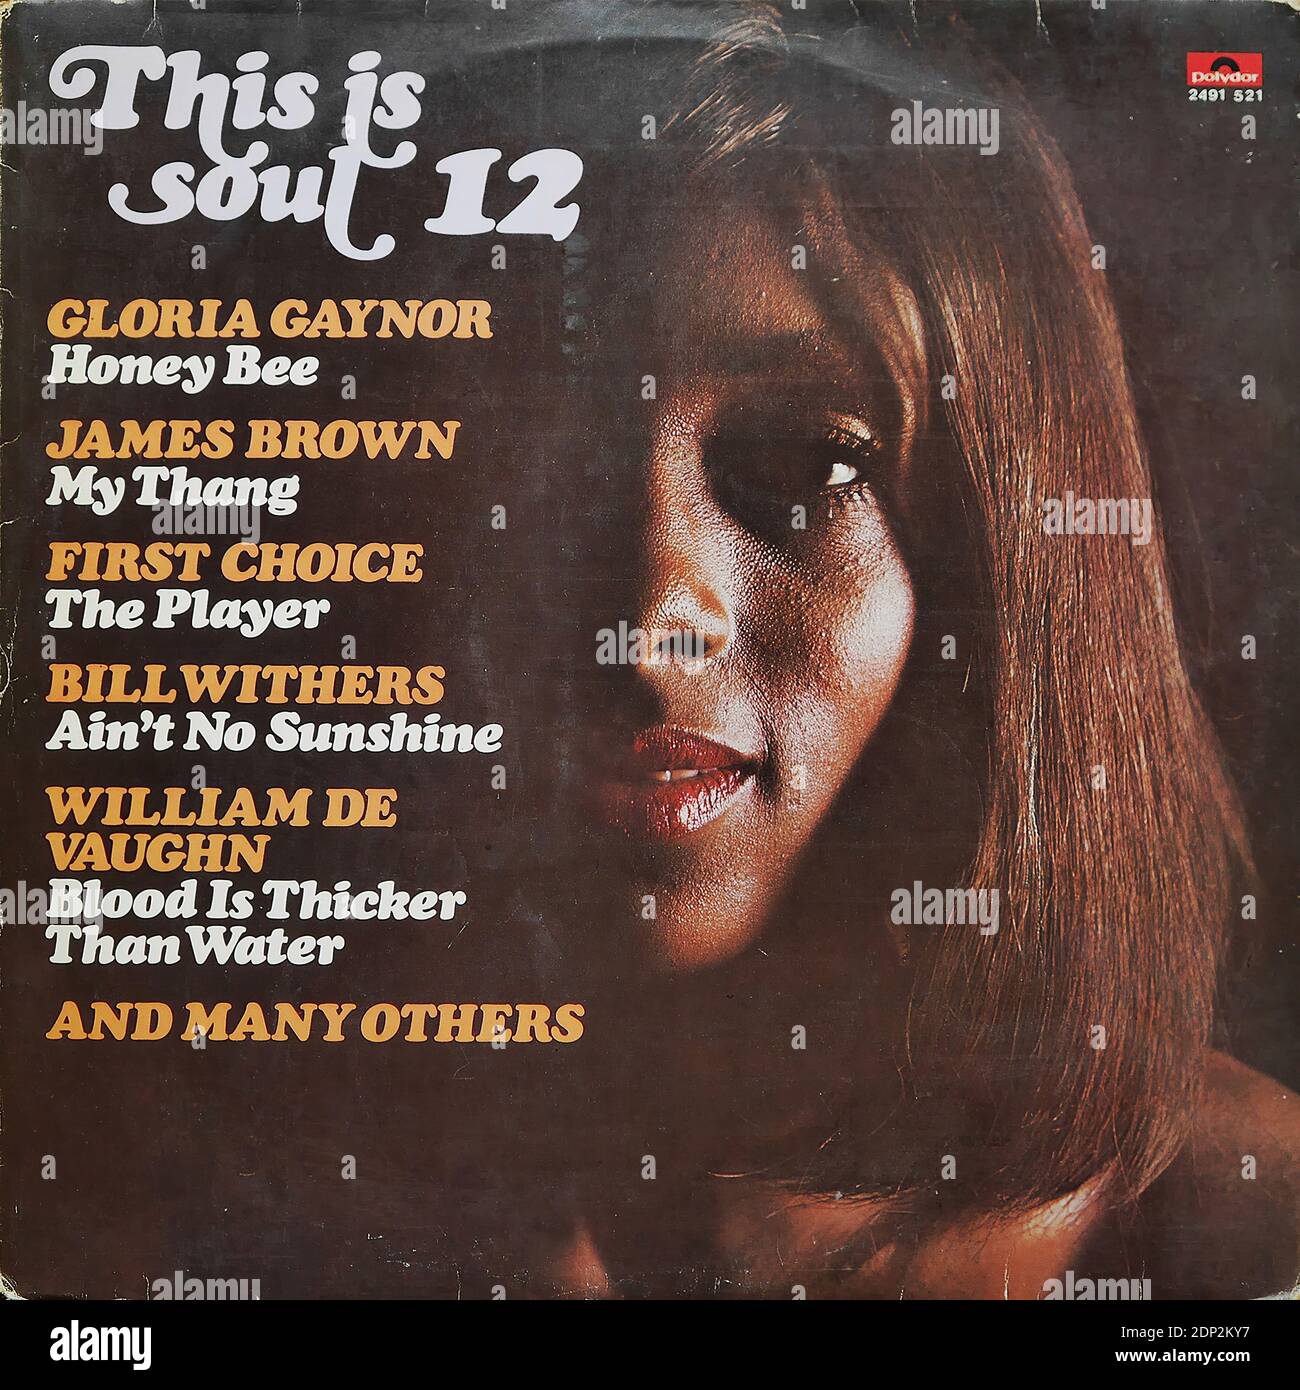 This is Soul 12, Polydor 2491 521 - copertina di album in vinile d'epoca Foto Stock